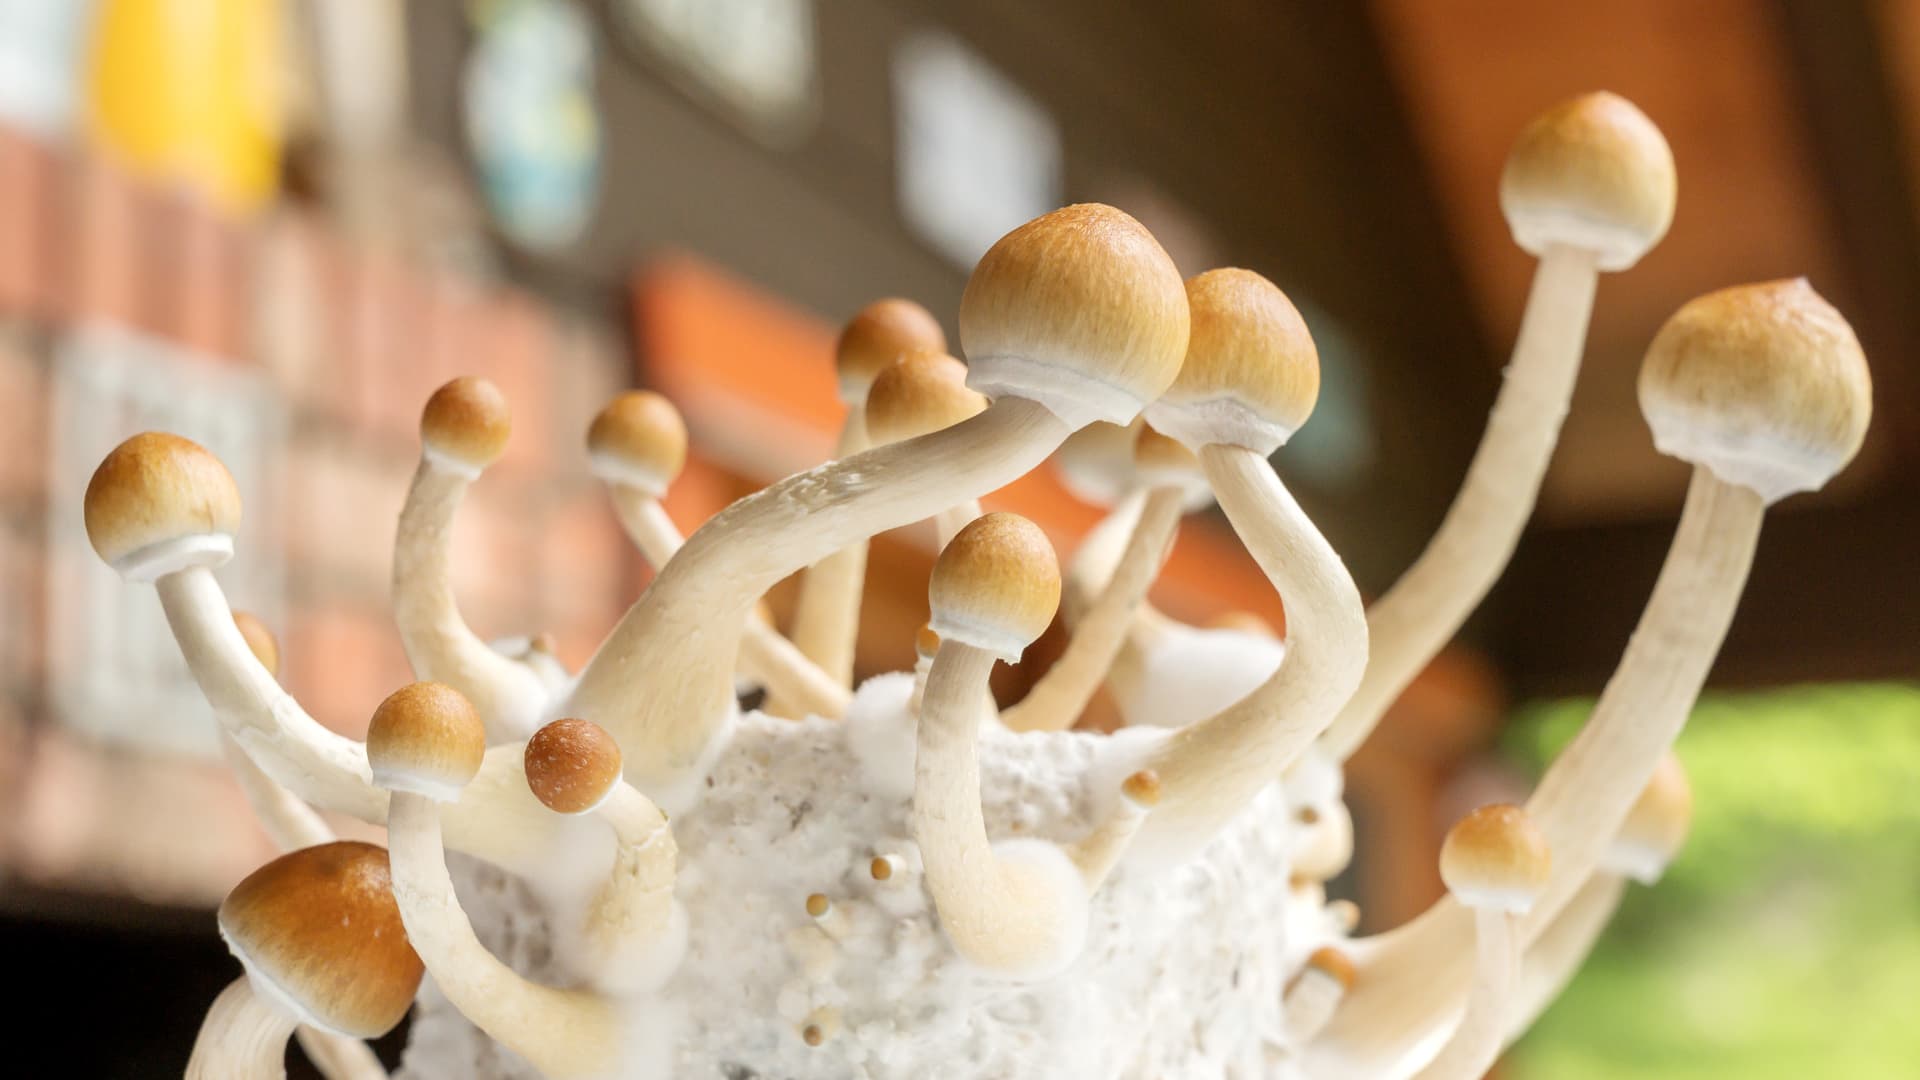 Magic mushroom compound psilocybin can help treat depression, study finds